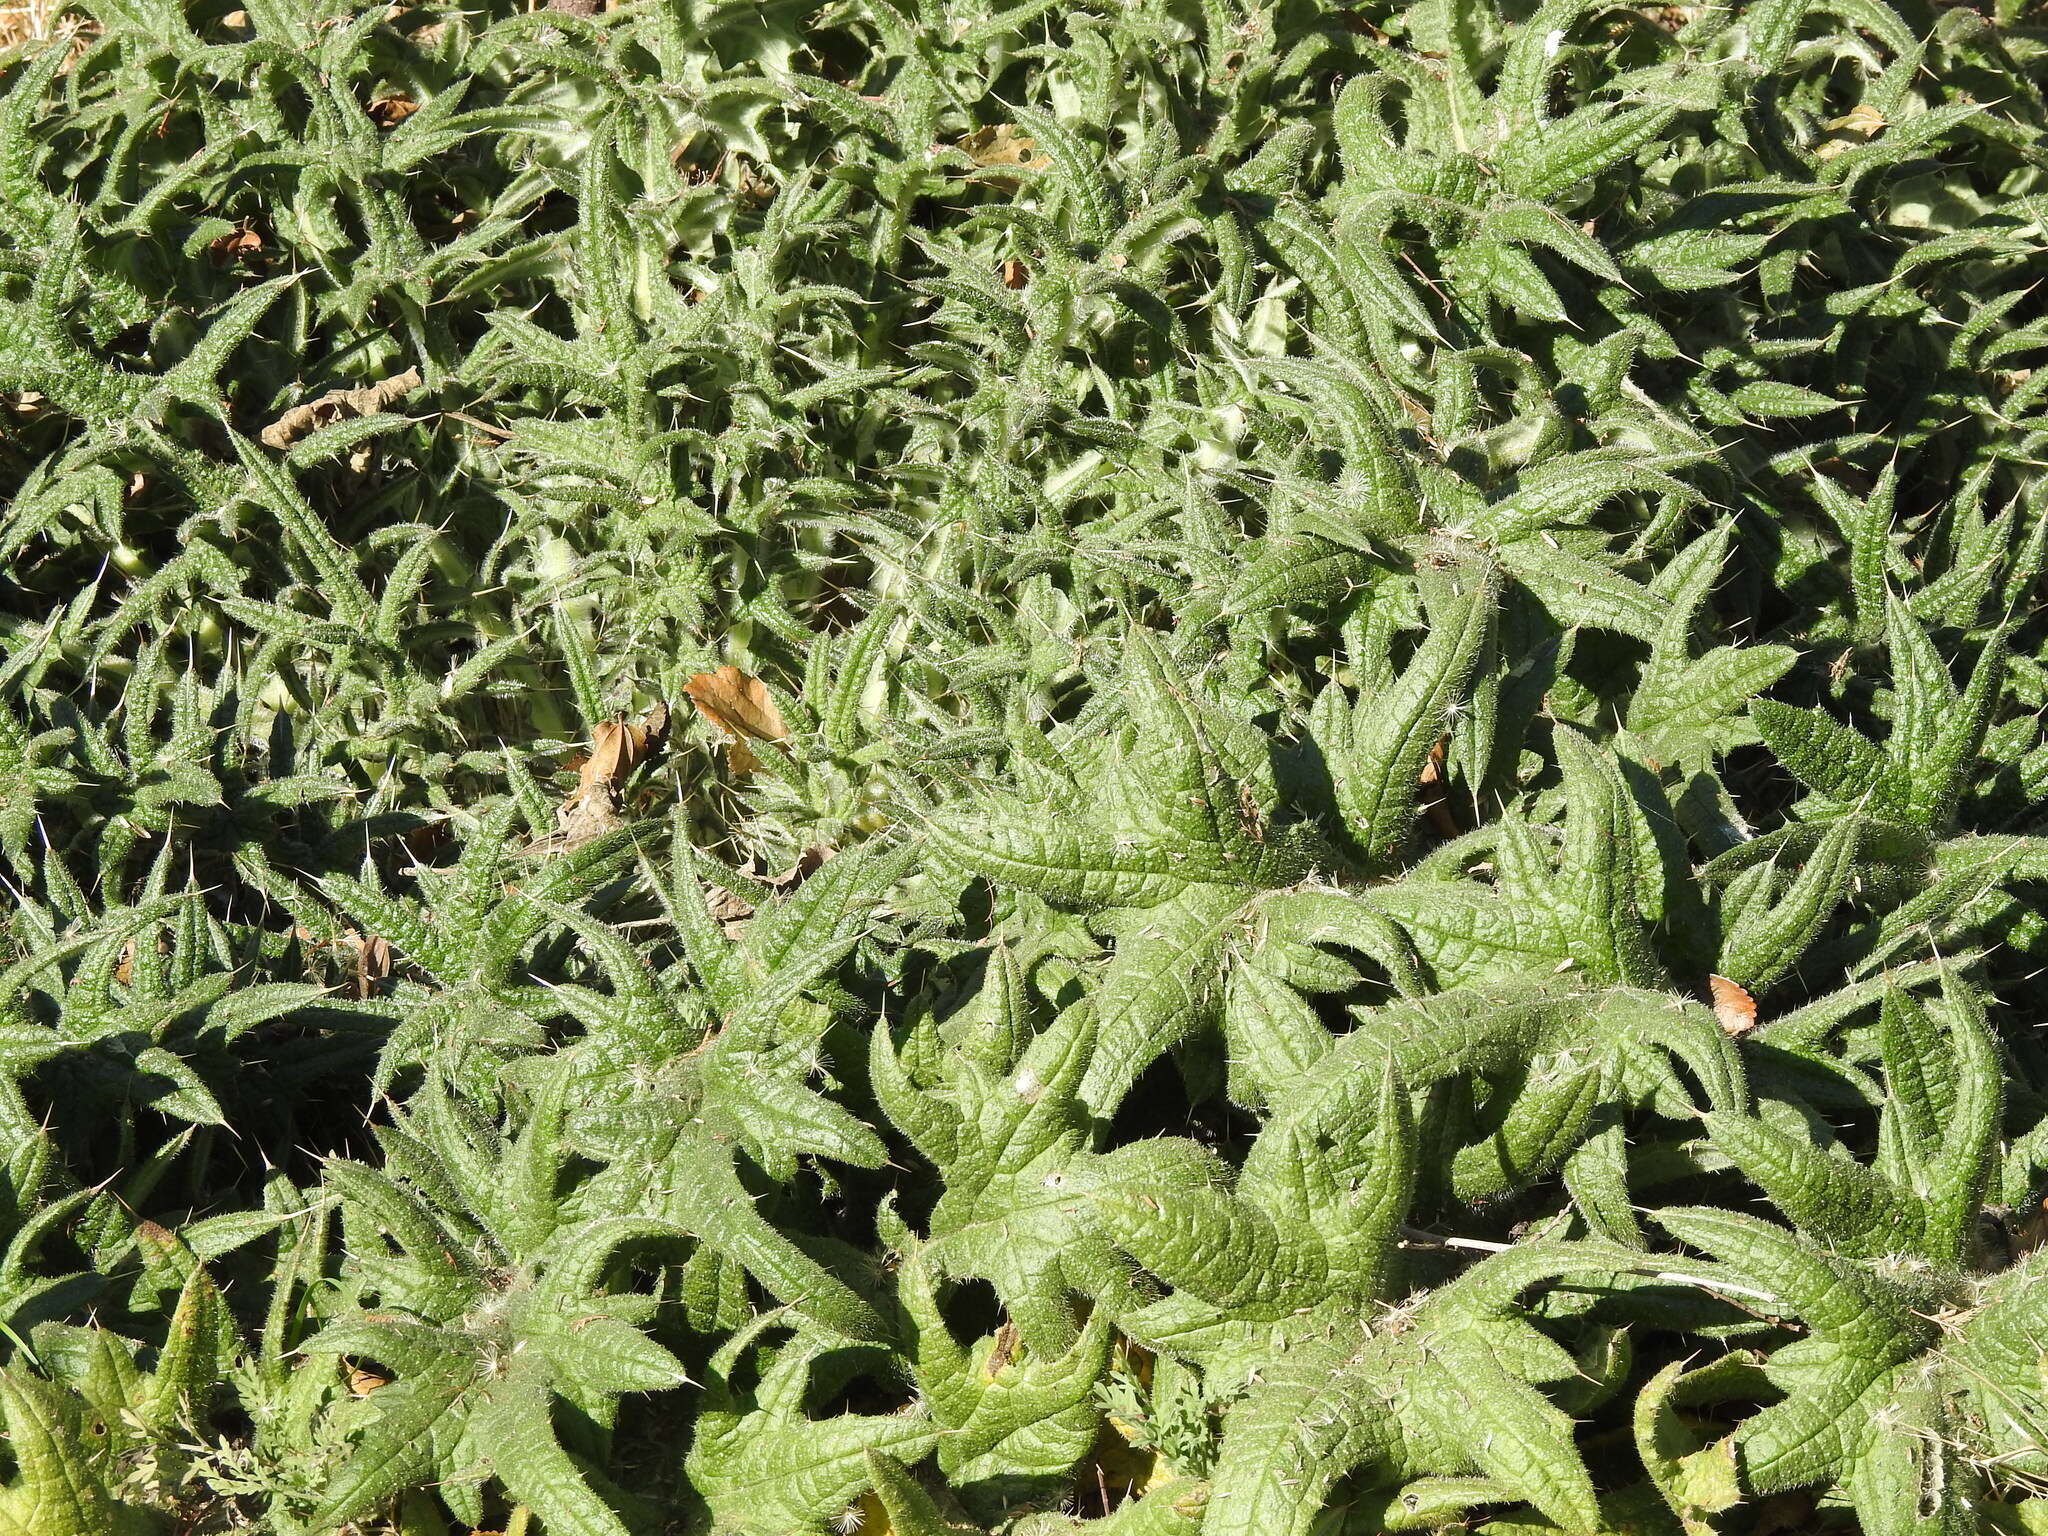 Image of <i>Cirsium <i>vulgare</i></i> subsp. vulgare